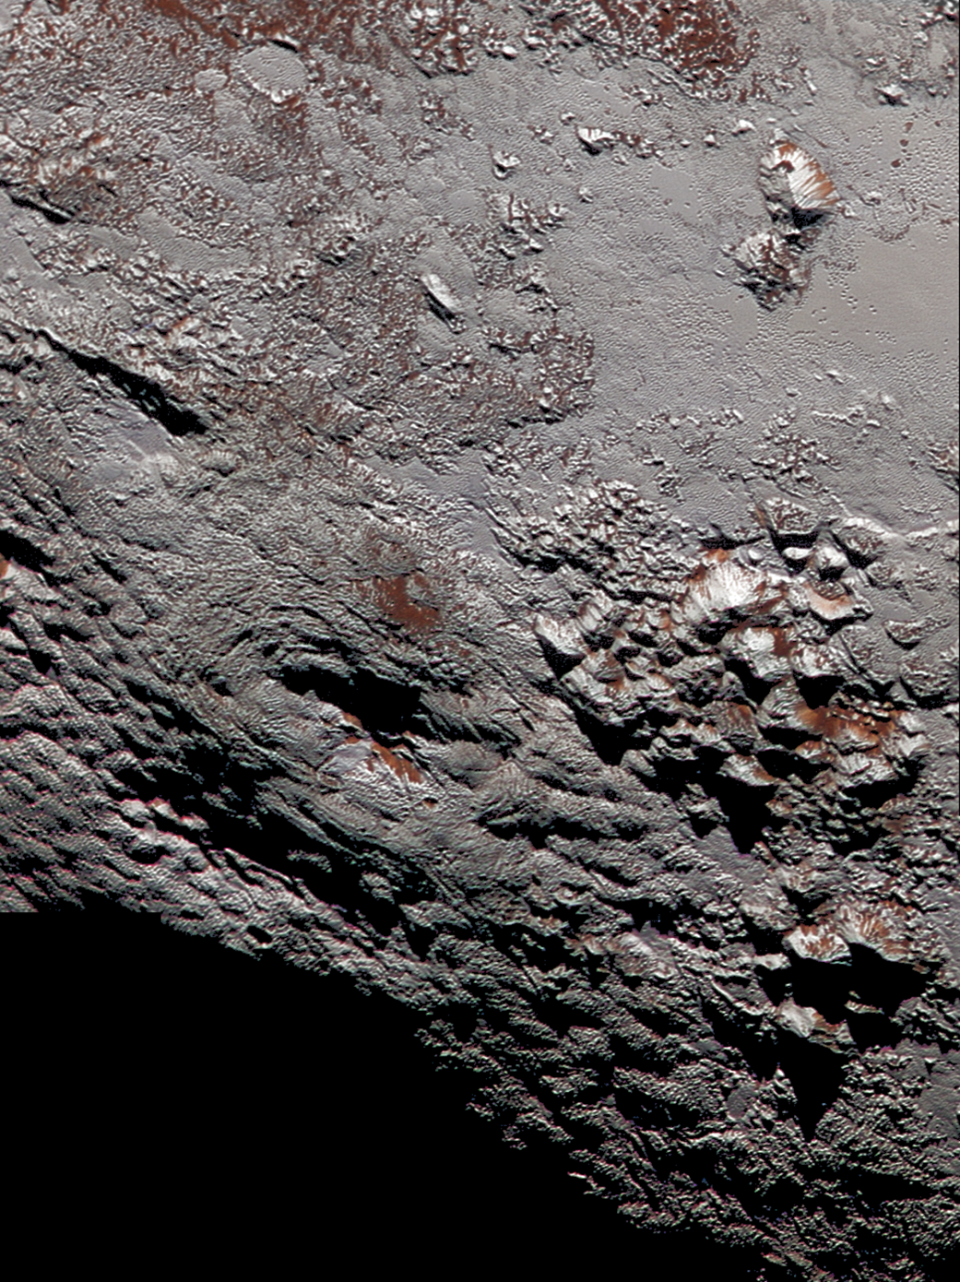 A Sharper View of Pluto - 2015